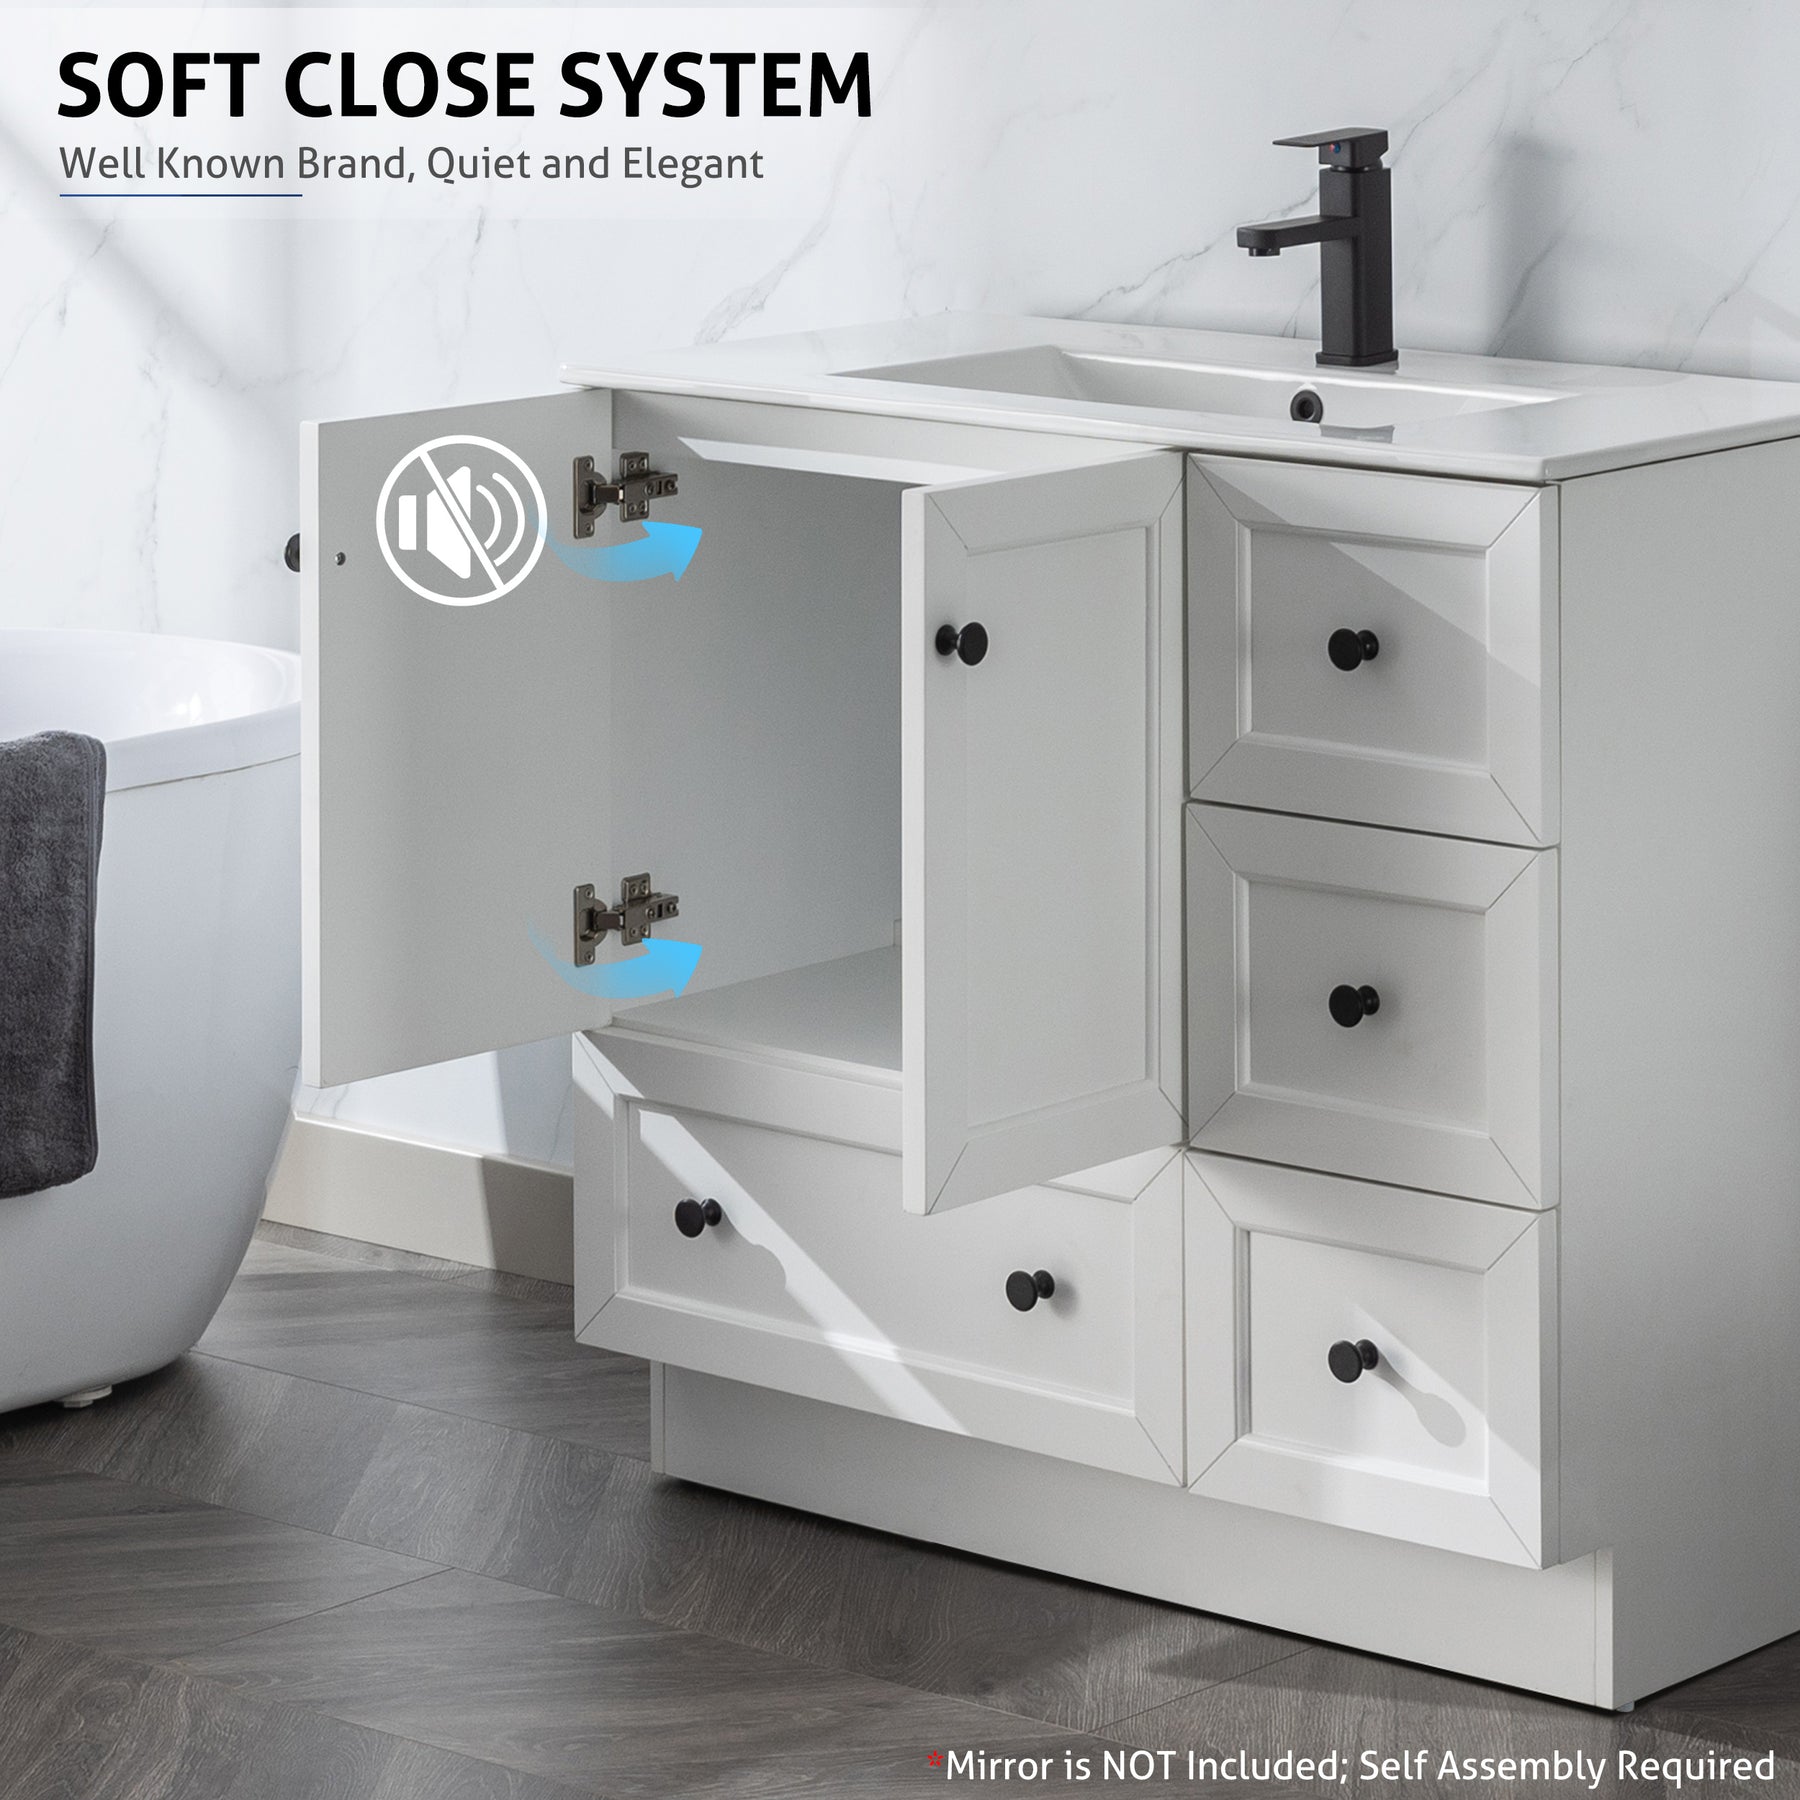 Kitchen Base 36" Freestanding Bathroom Vanity Combo with Single Undermount Sink